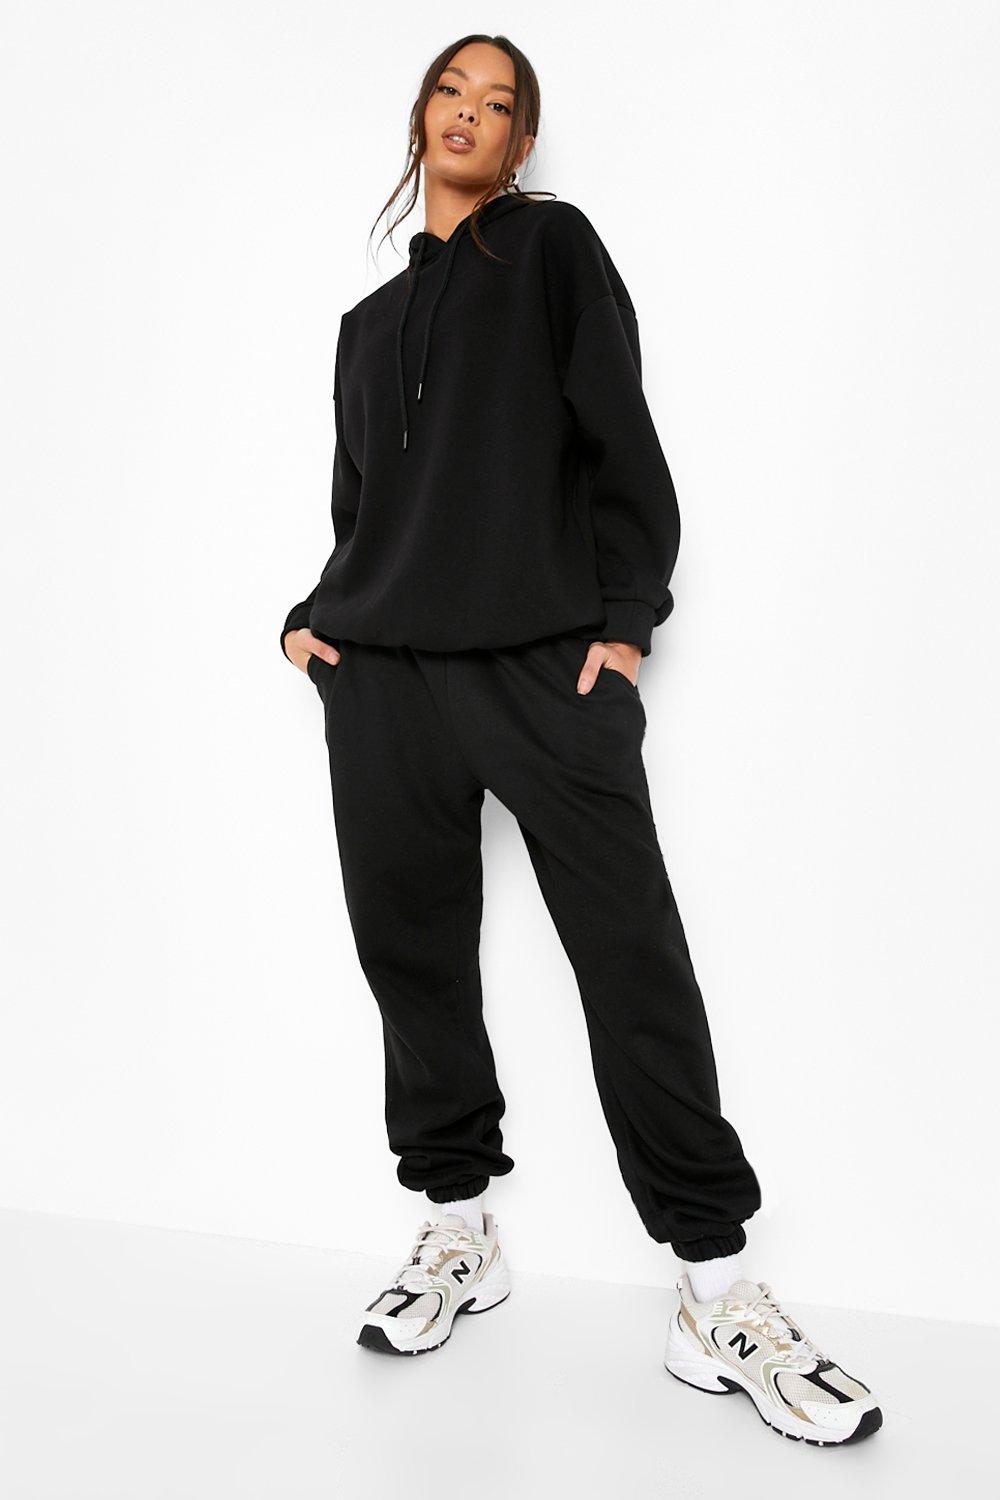 Outfit deportivo para mujer con jogger total black con sudadera 】